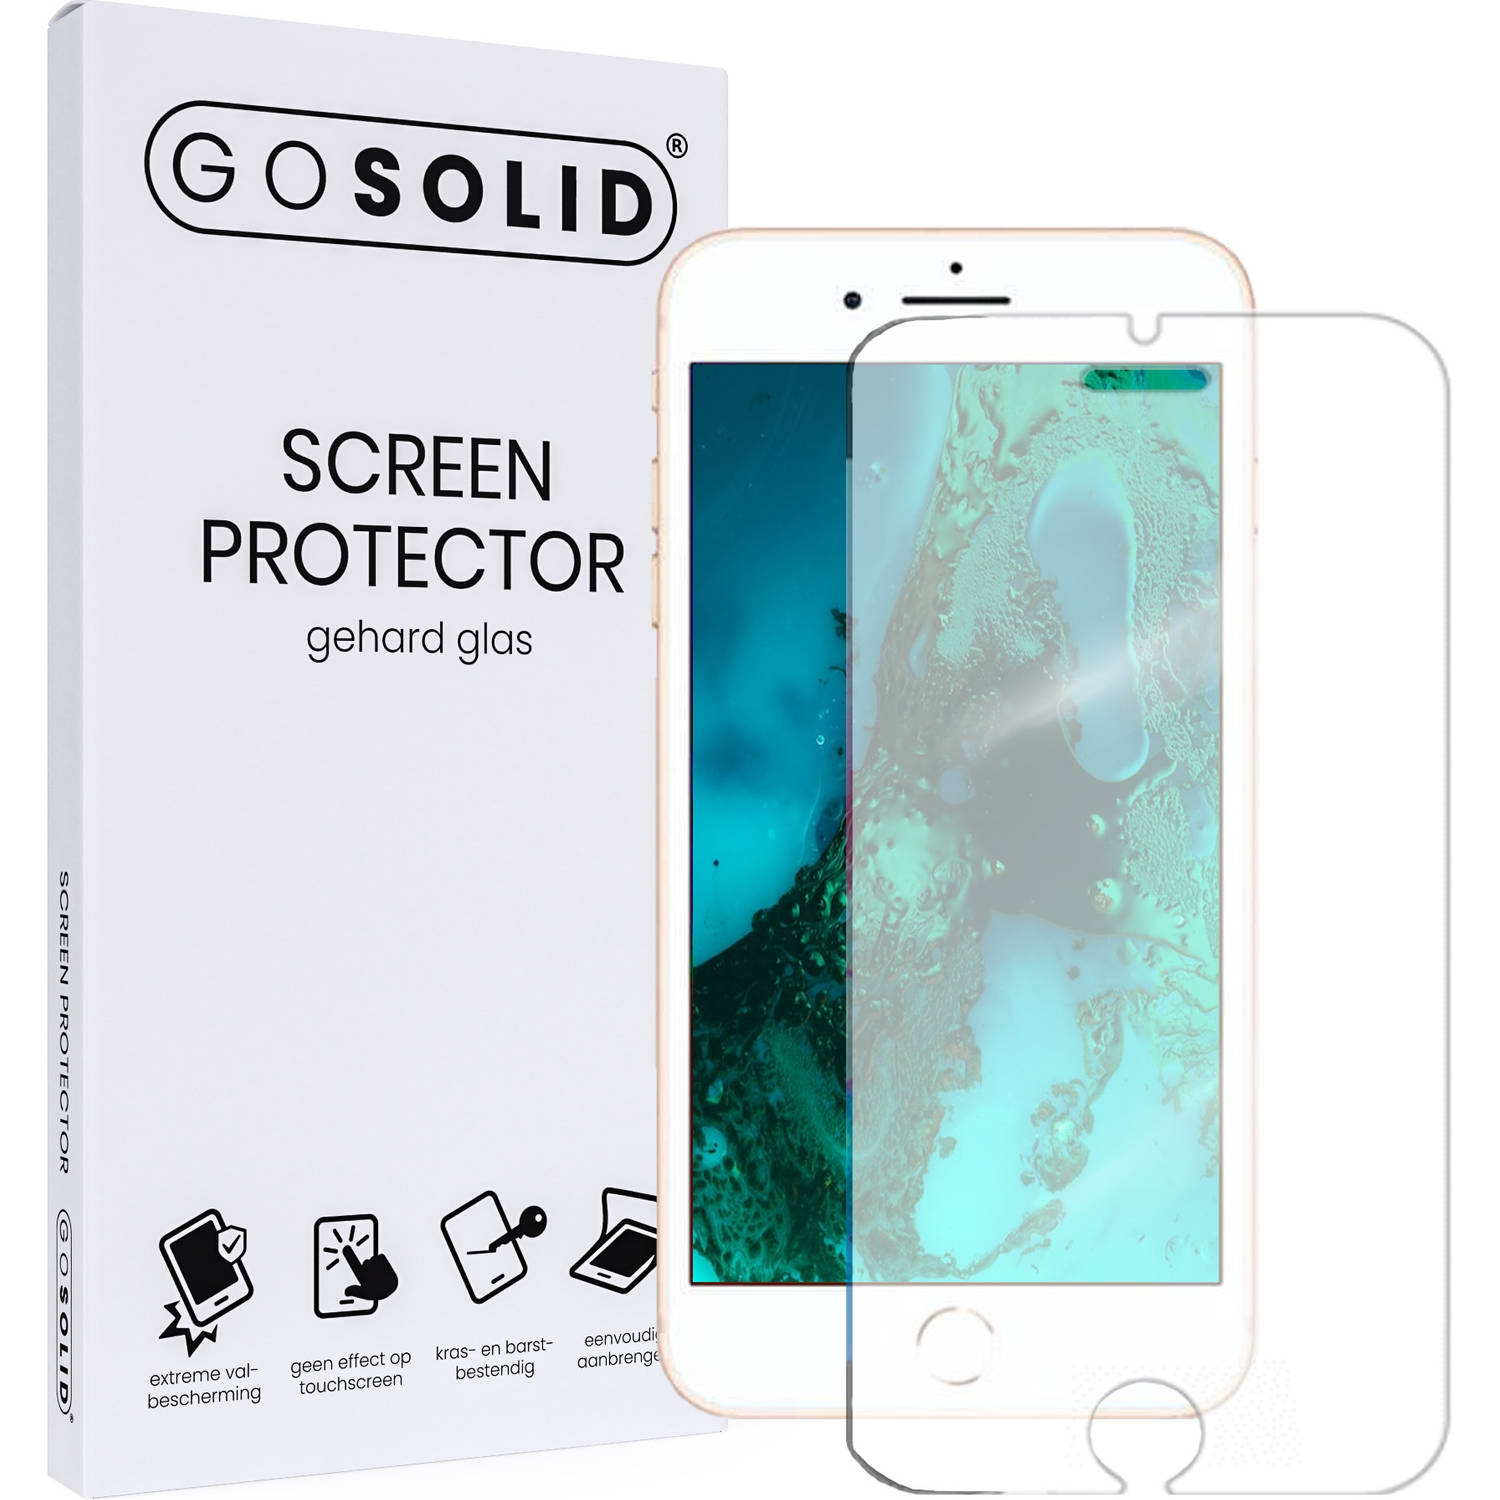 GO SOLID! ® Screenprotector iPhone 8 Plus - Apple - gehard glas